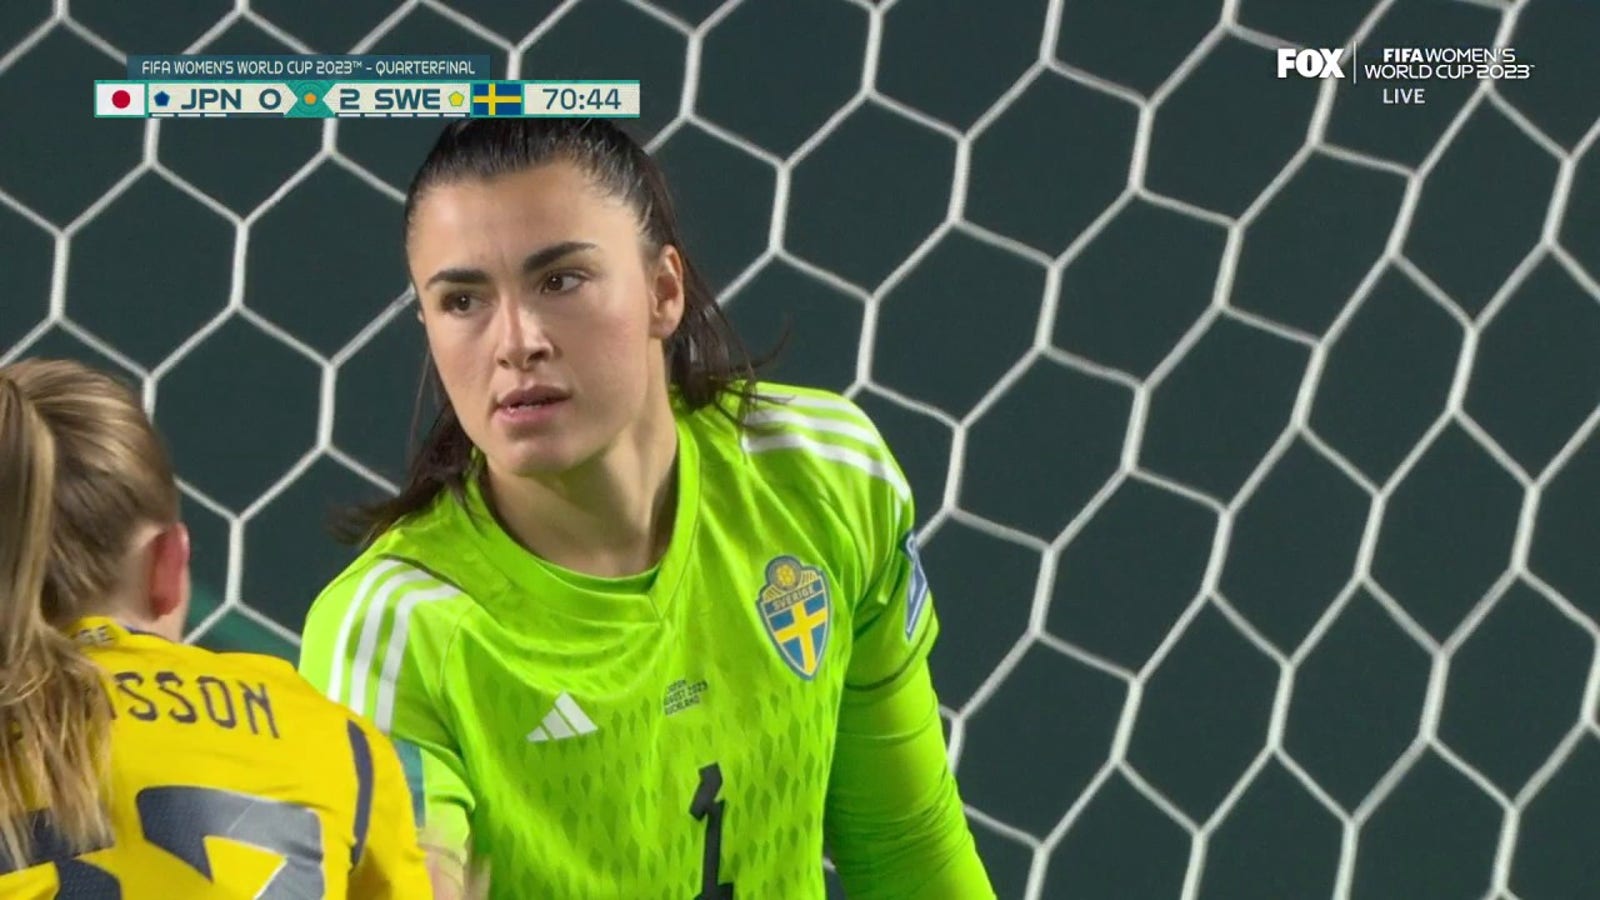 Zysira Mosović saves a shot on goal to keep Sweden's lead against Japan 2-0